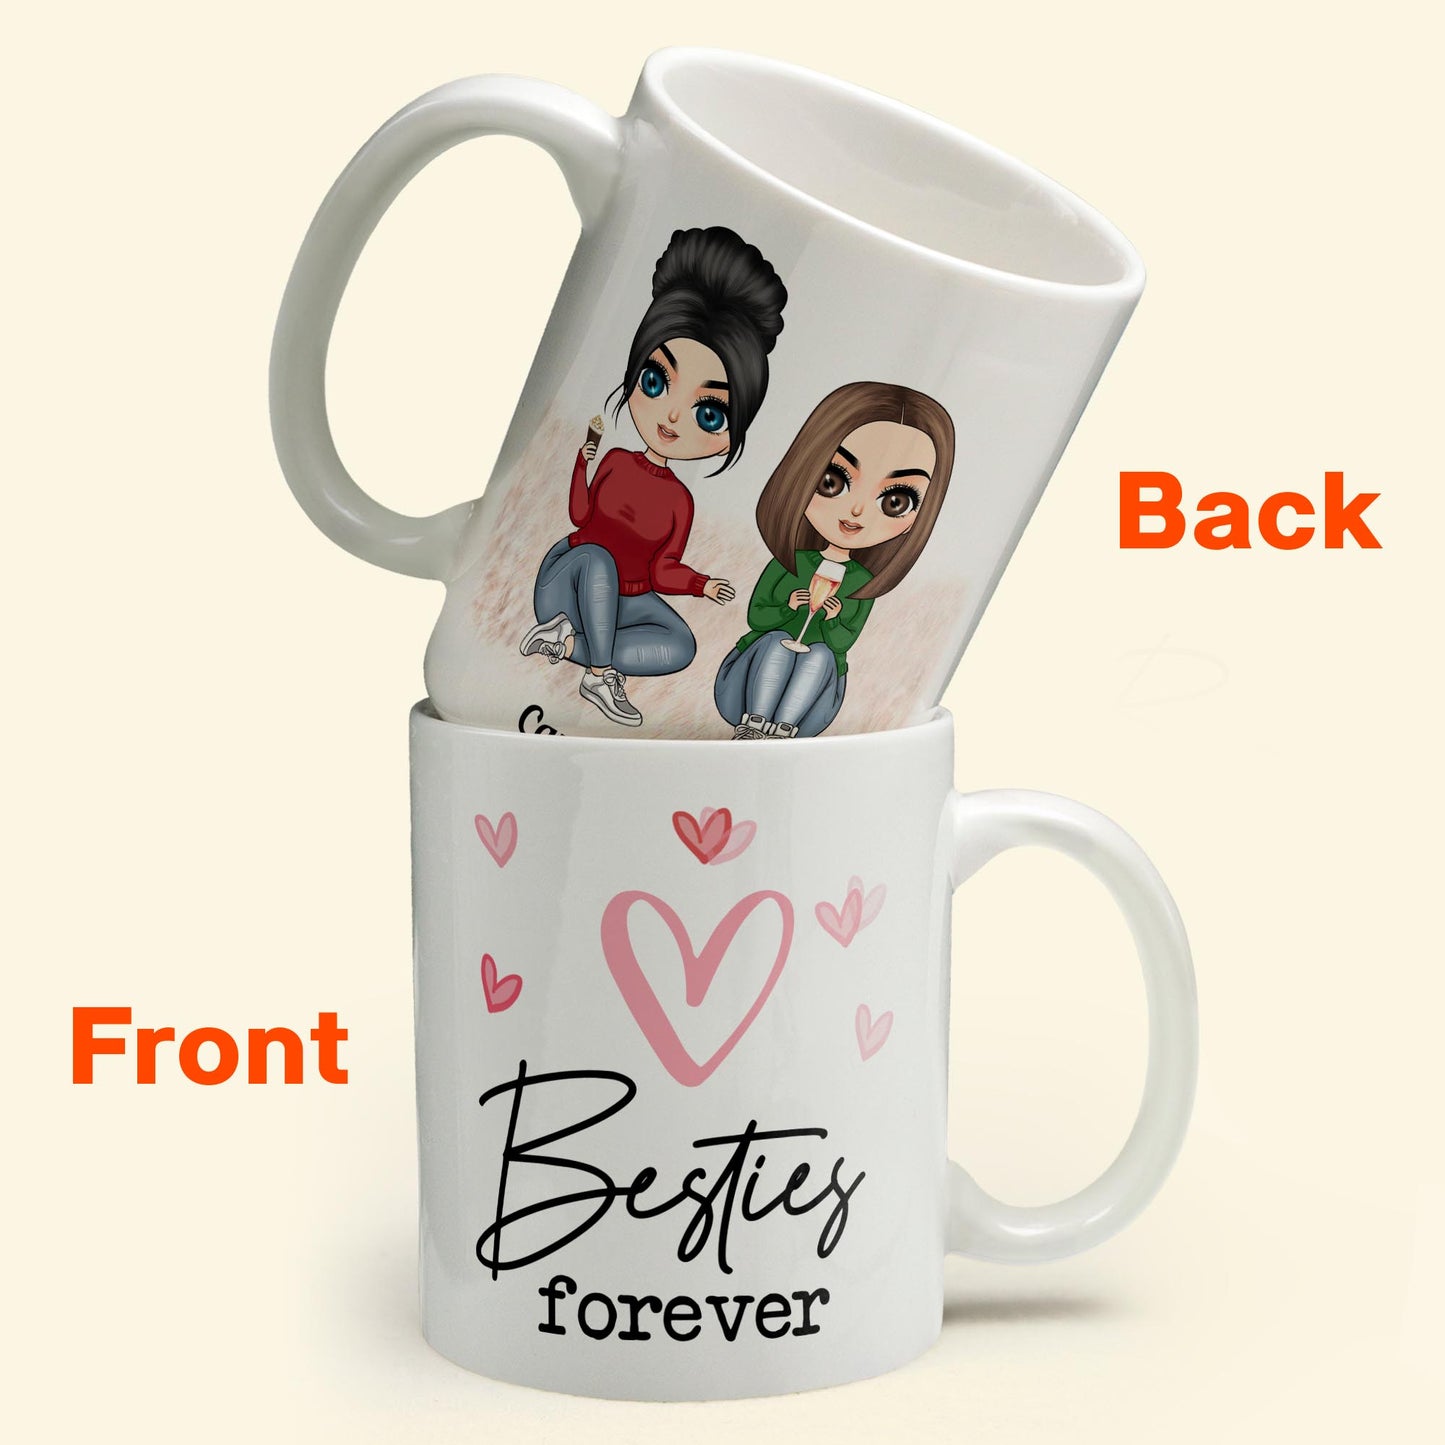 Besties Forever - Personalized Mug - Birthday Gift For Bestie, Best Friend, FF, Friend, Soul Sister - Sitting Cartoon Girls